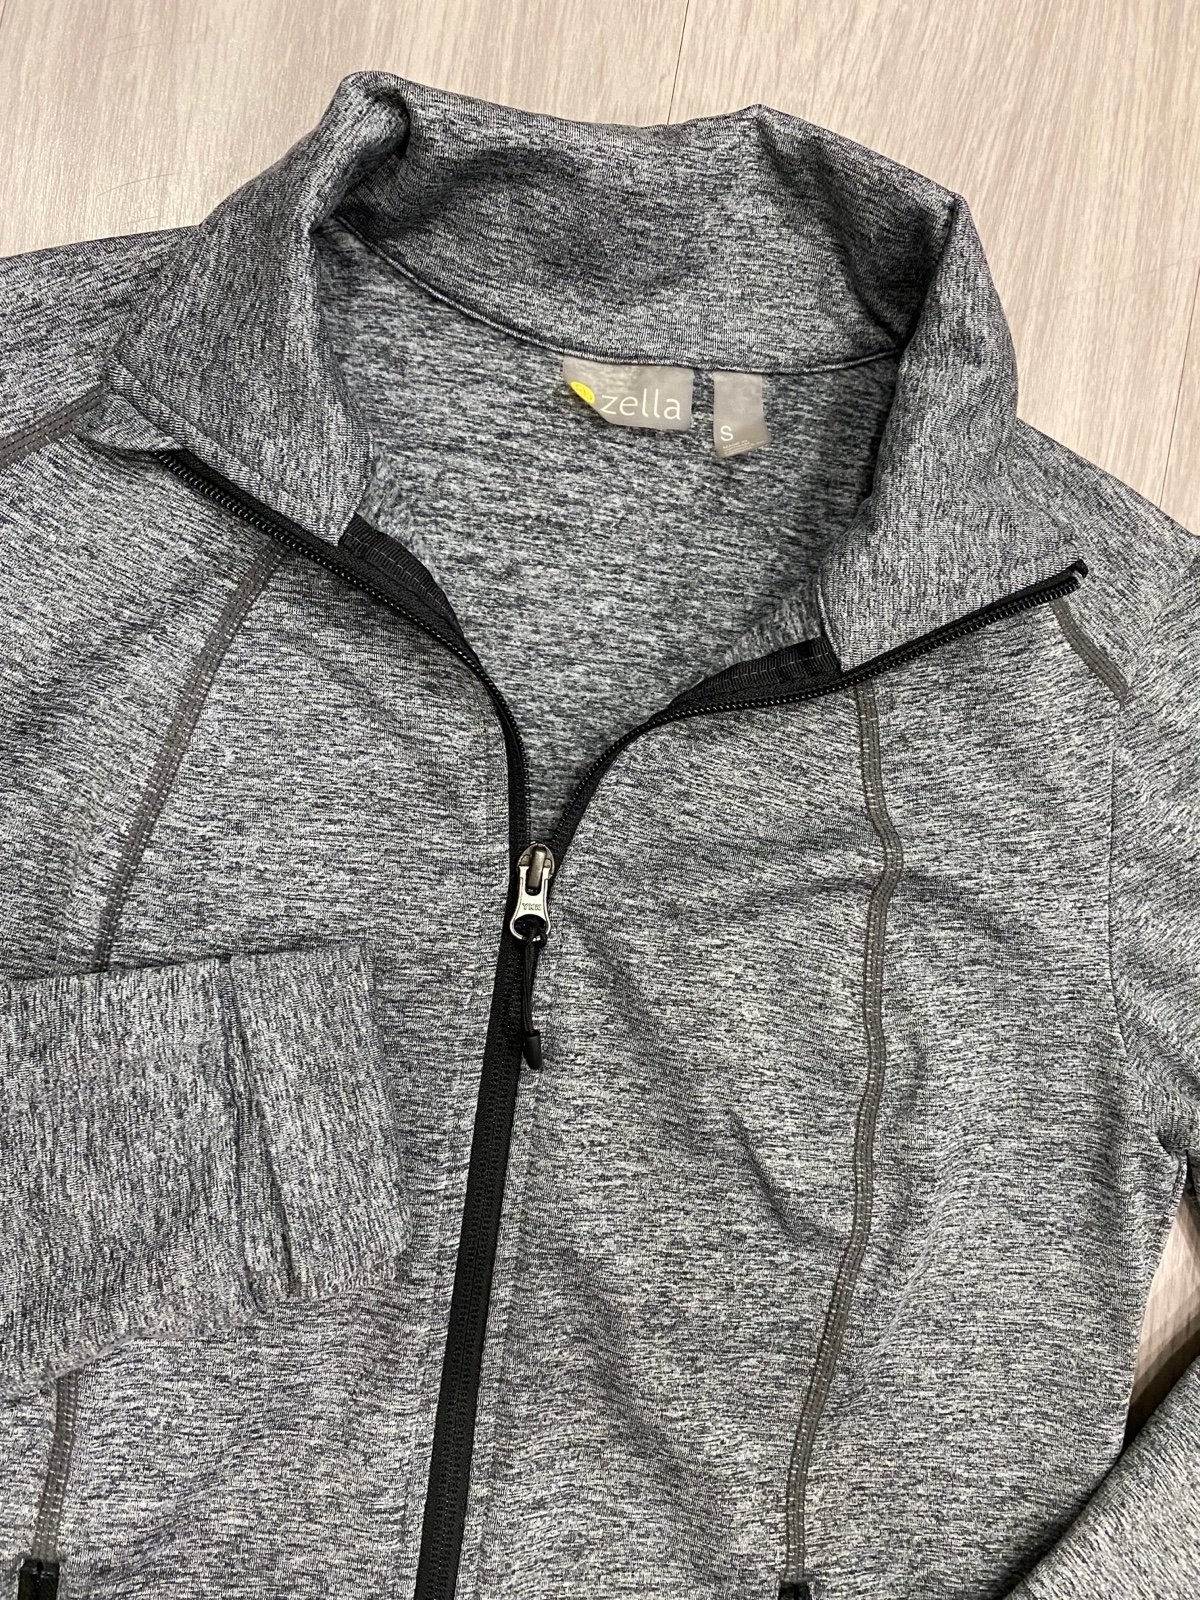 ZELLA Black Heathered Gray Thumb Hole Full Zip Up Athletic Jacket Yoga Small S 7KgGbaC9C